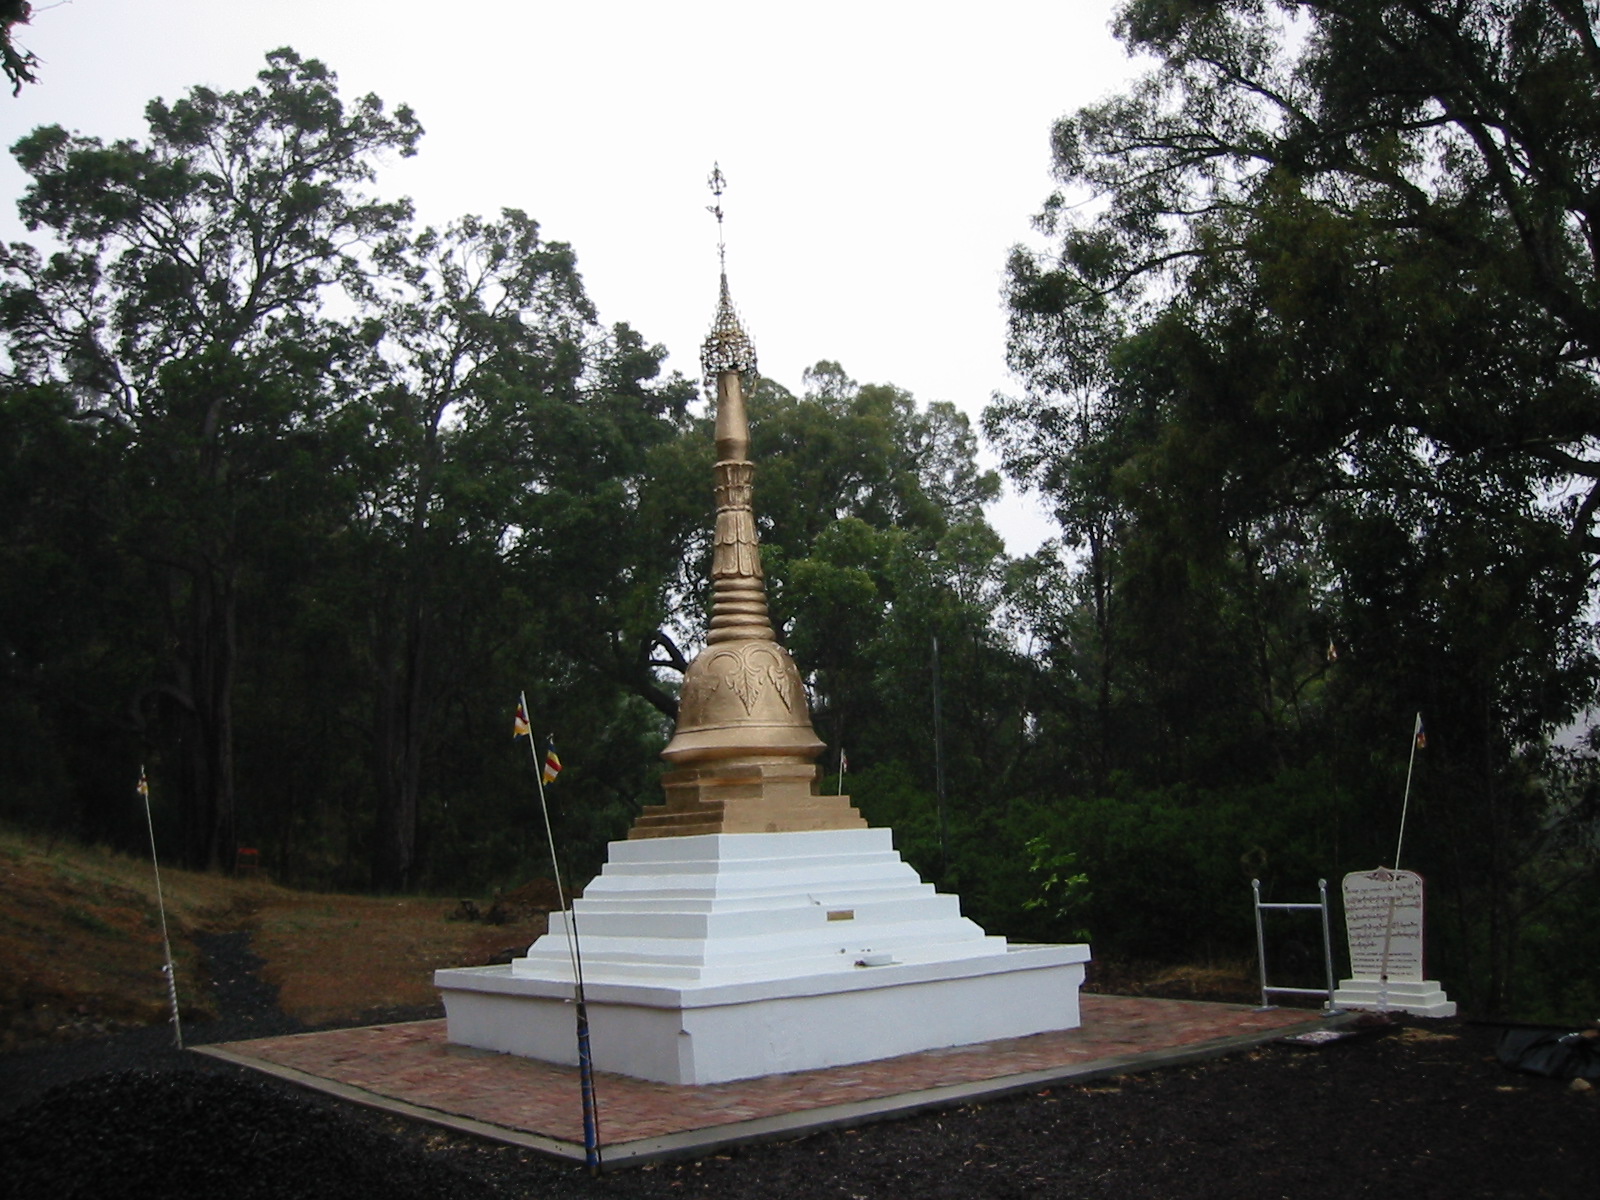 The peace pagoda